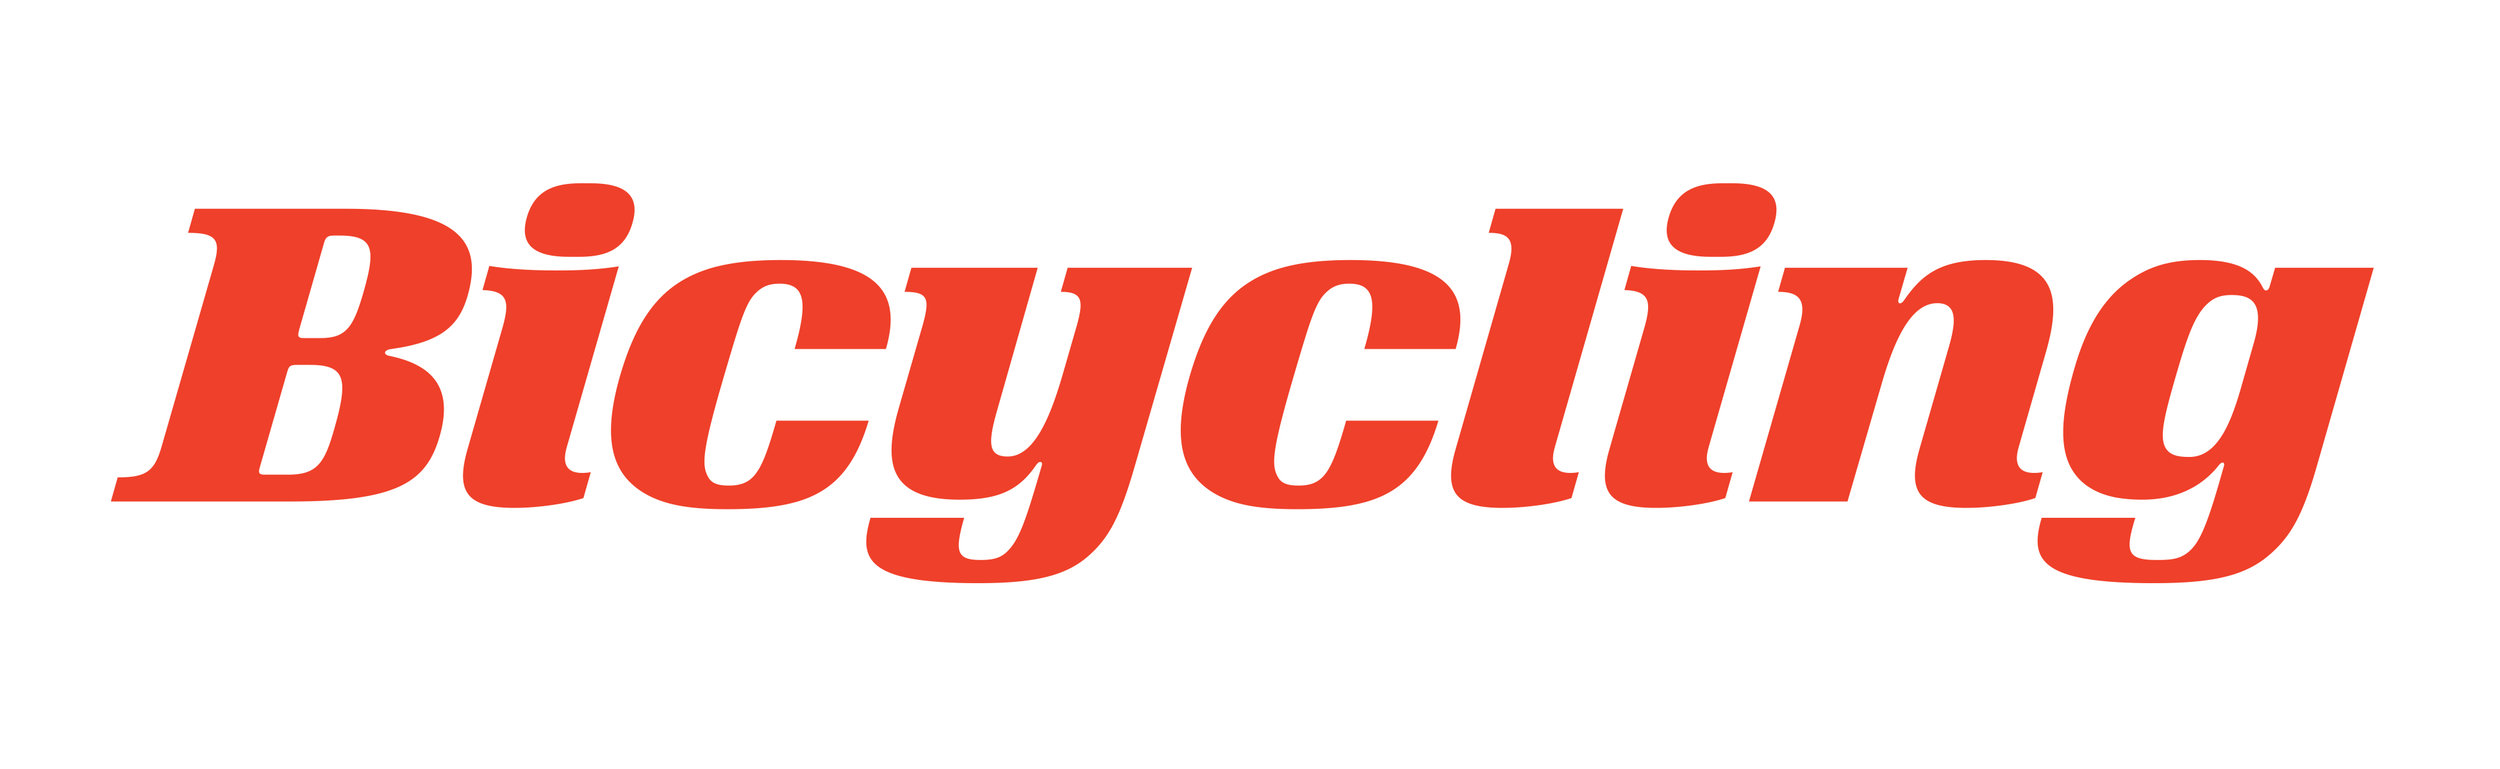 Bicycling Logo.jpg